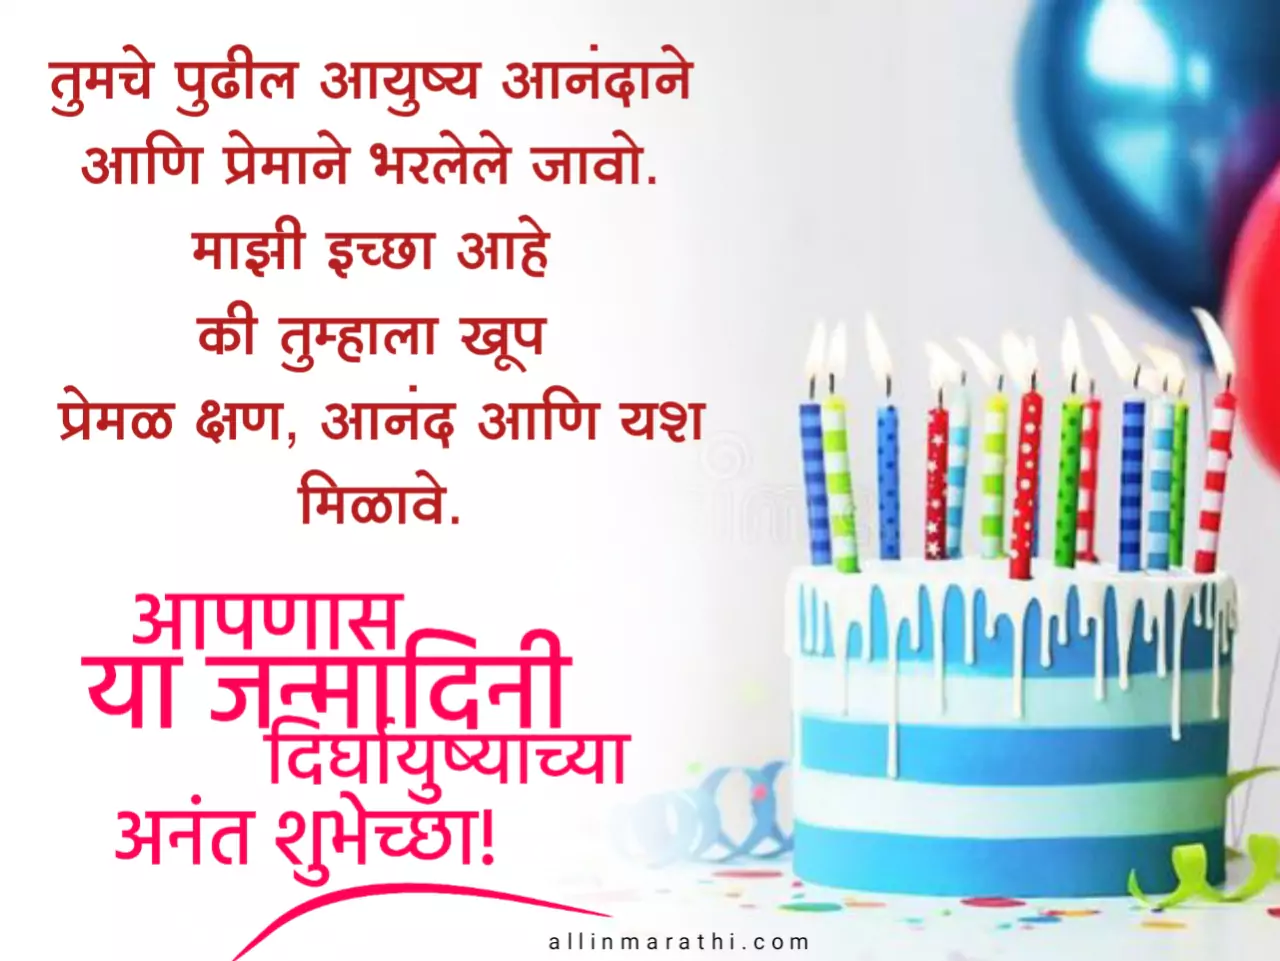 Happy birthday wishes in marathi, वाढदिवसाच्या हार्दिक शुभेच्छा फोटो